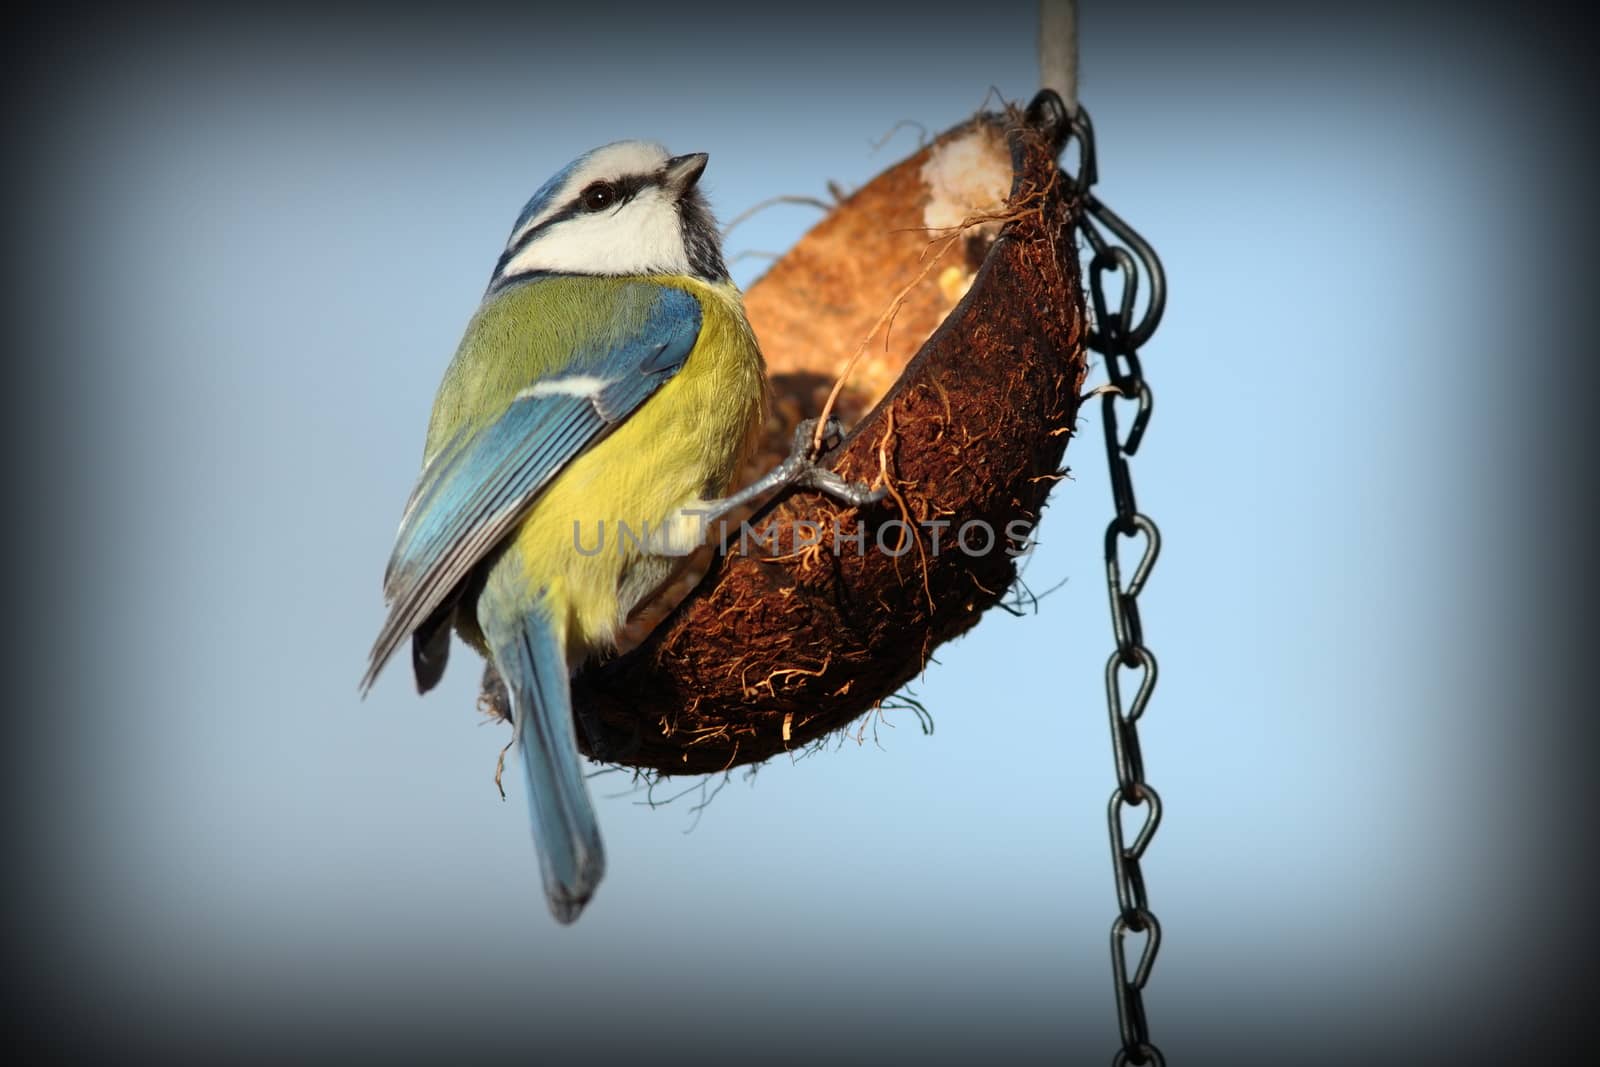 tiny garden bird ( blue tit, parus caeruleus ) on coconut feeder with lard and seeds